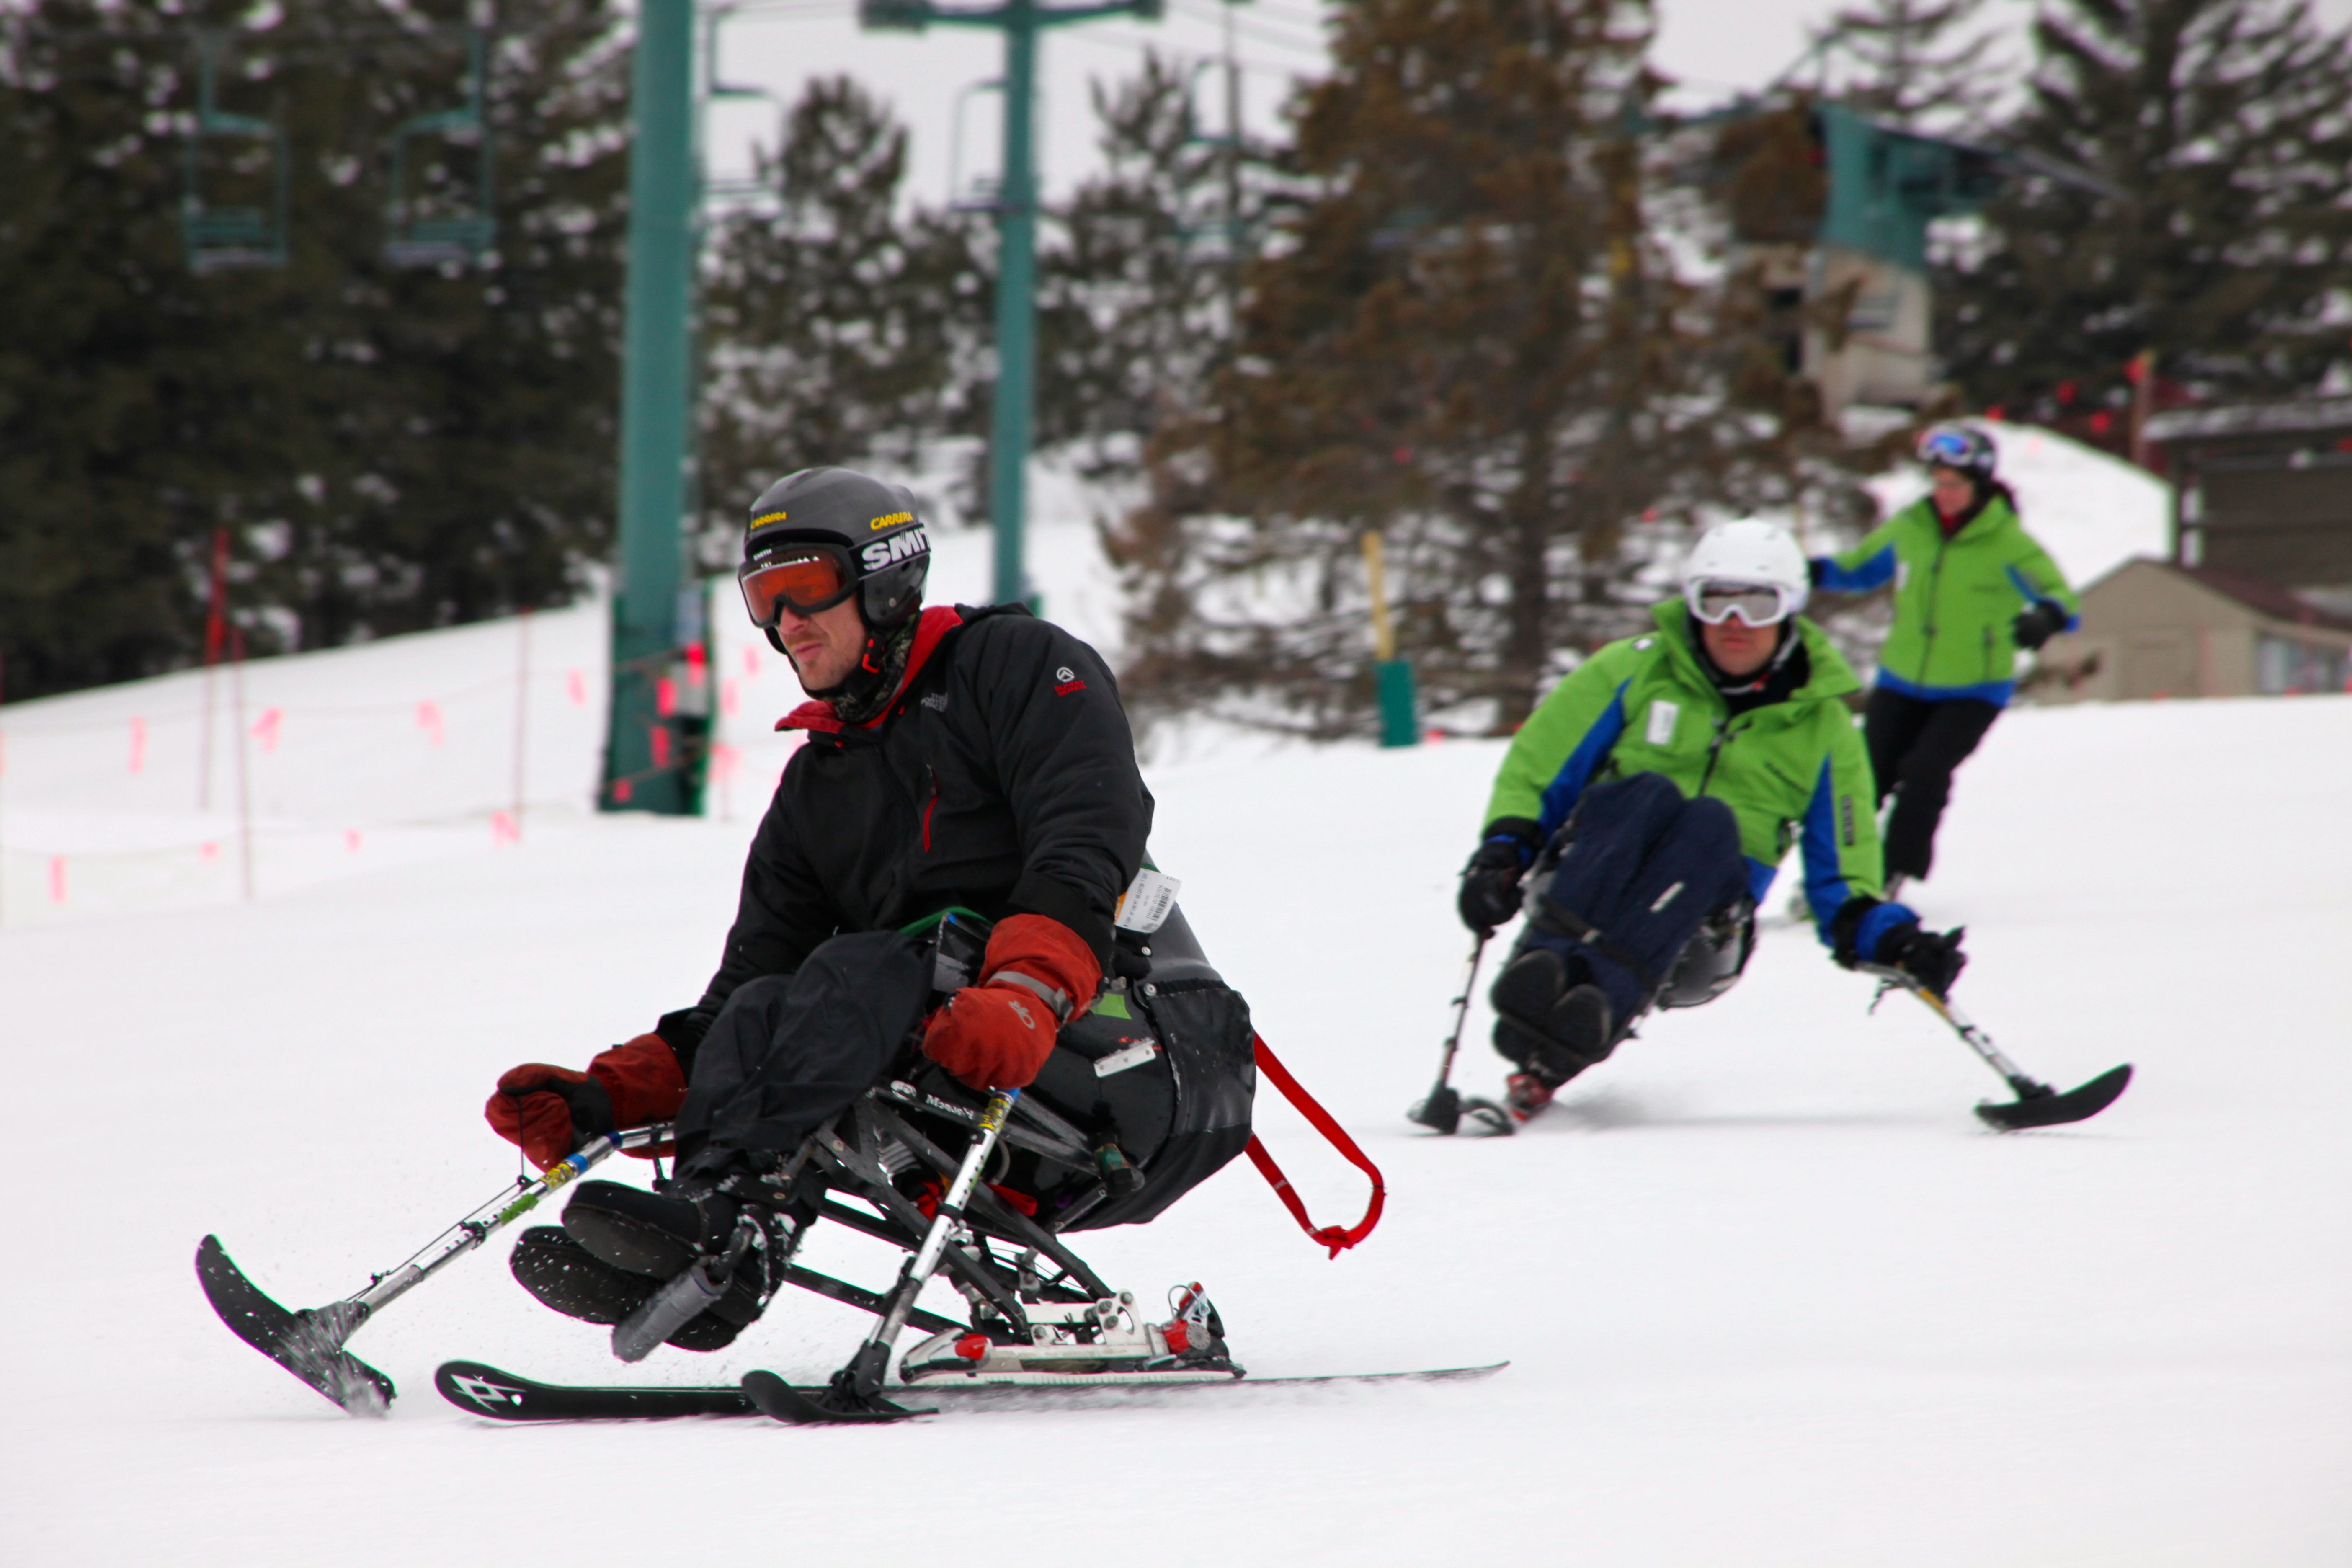 Adaptive sports - skiing